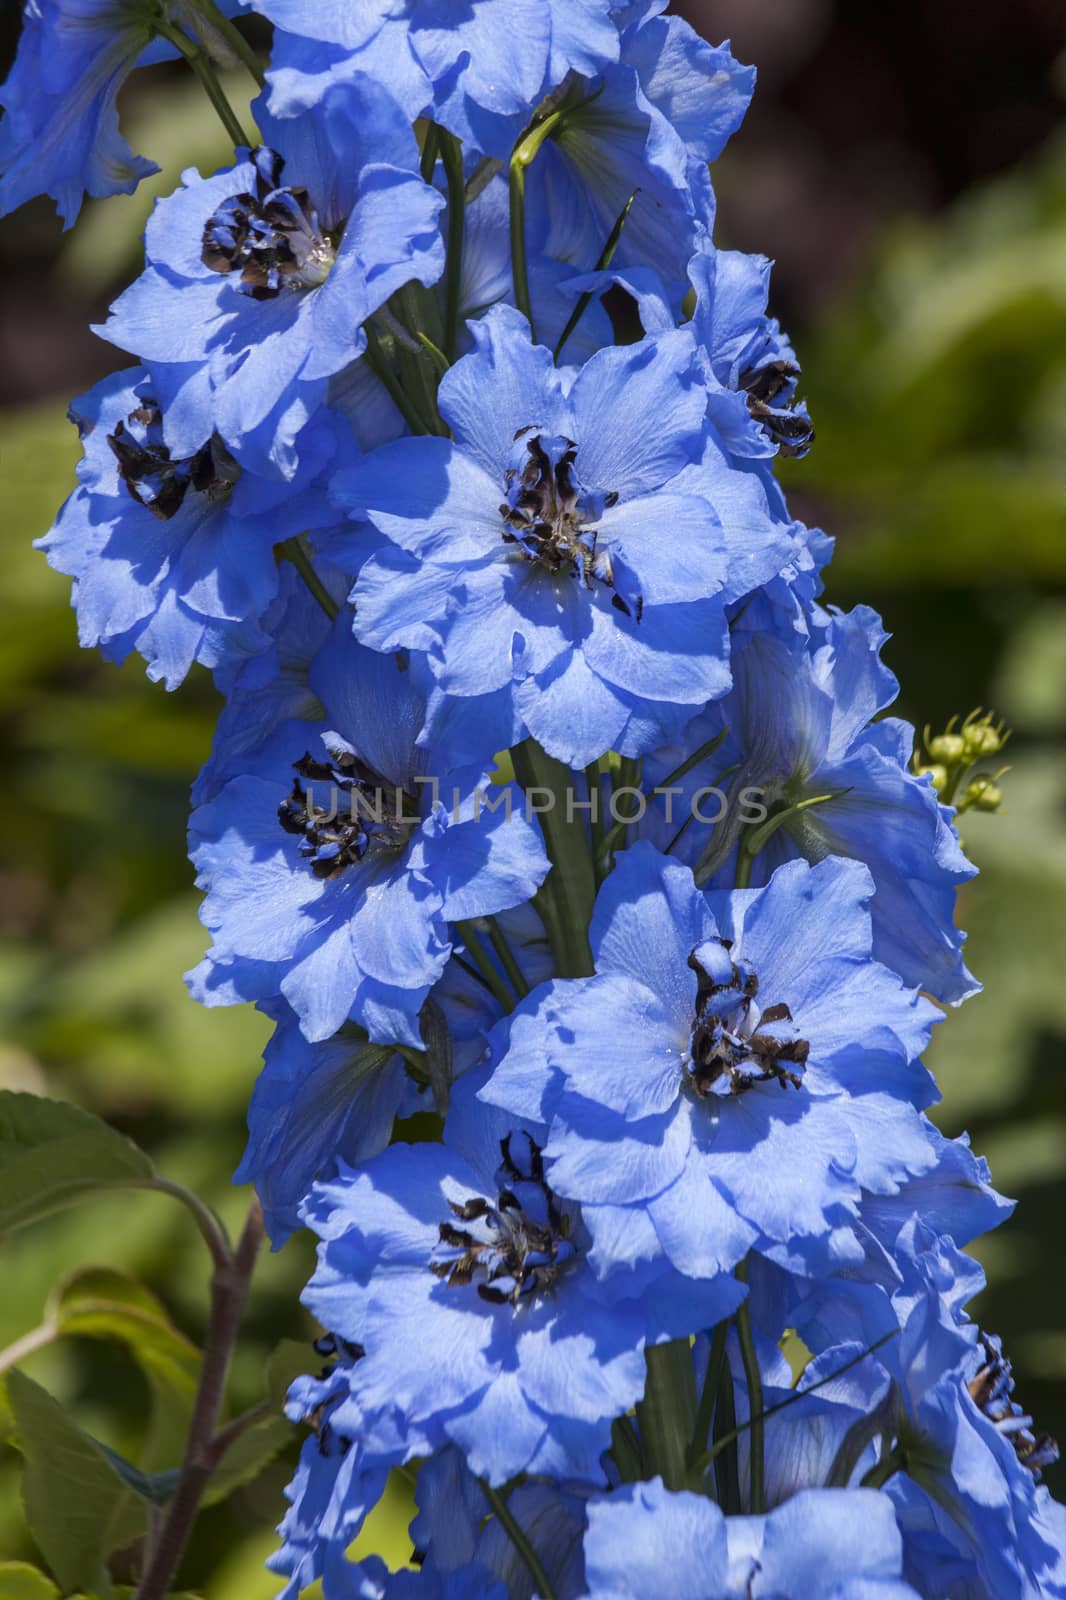 Delphinium 'Pandora' a blue herbaceous spring summer flower plant commonly known as larkspur